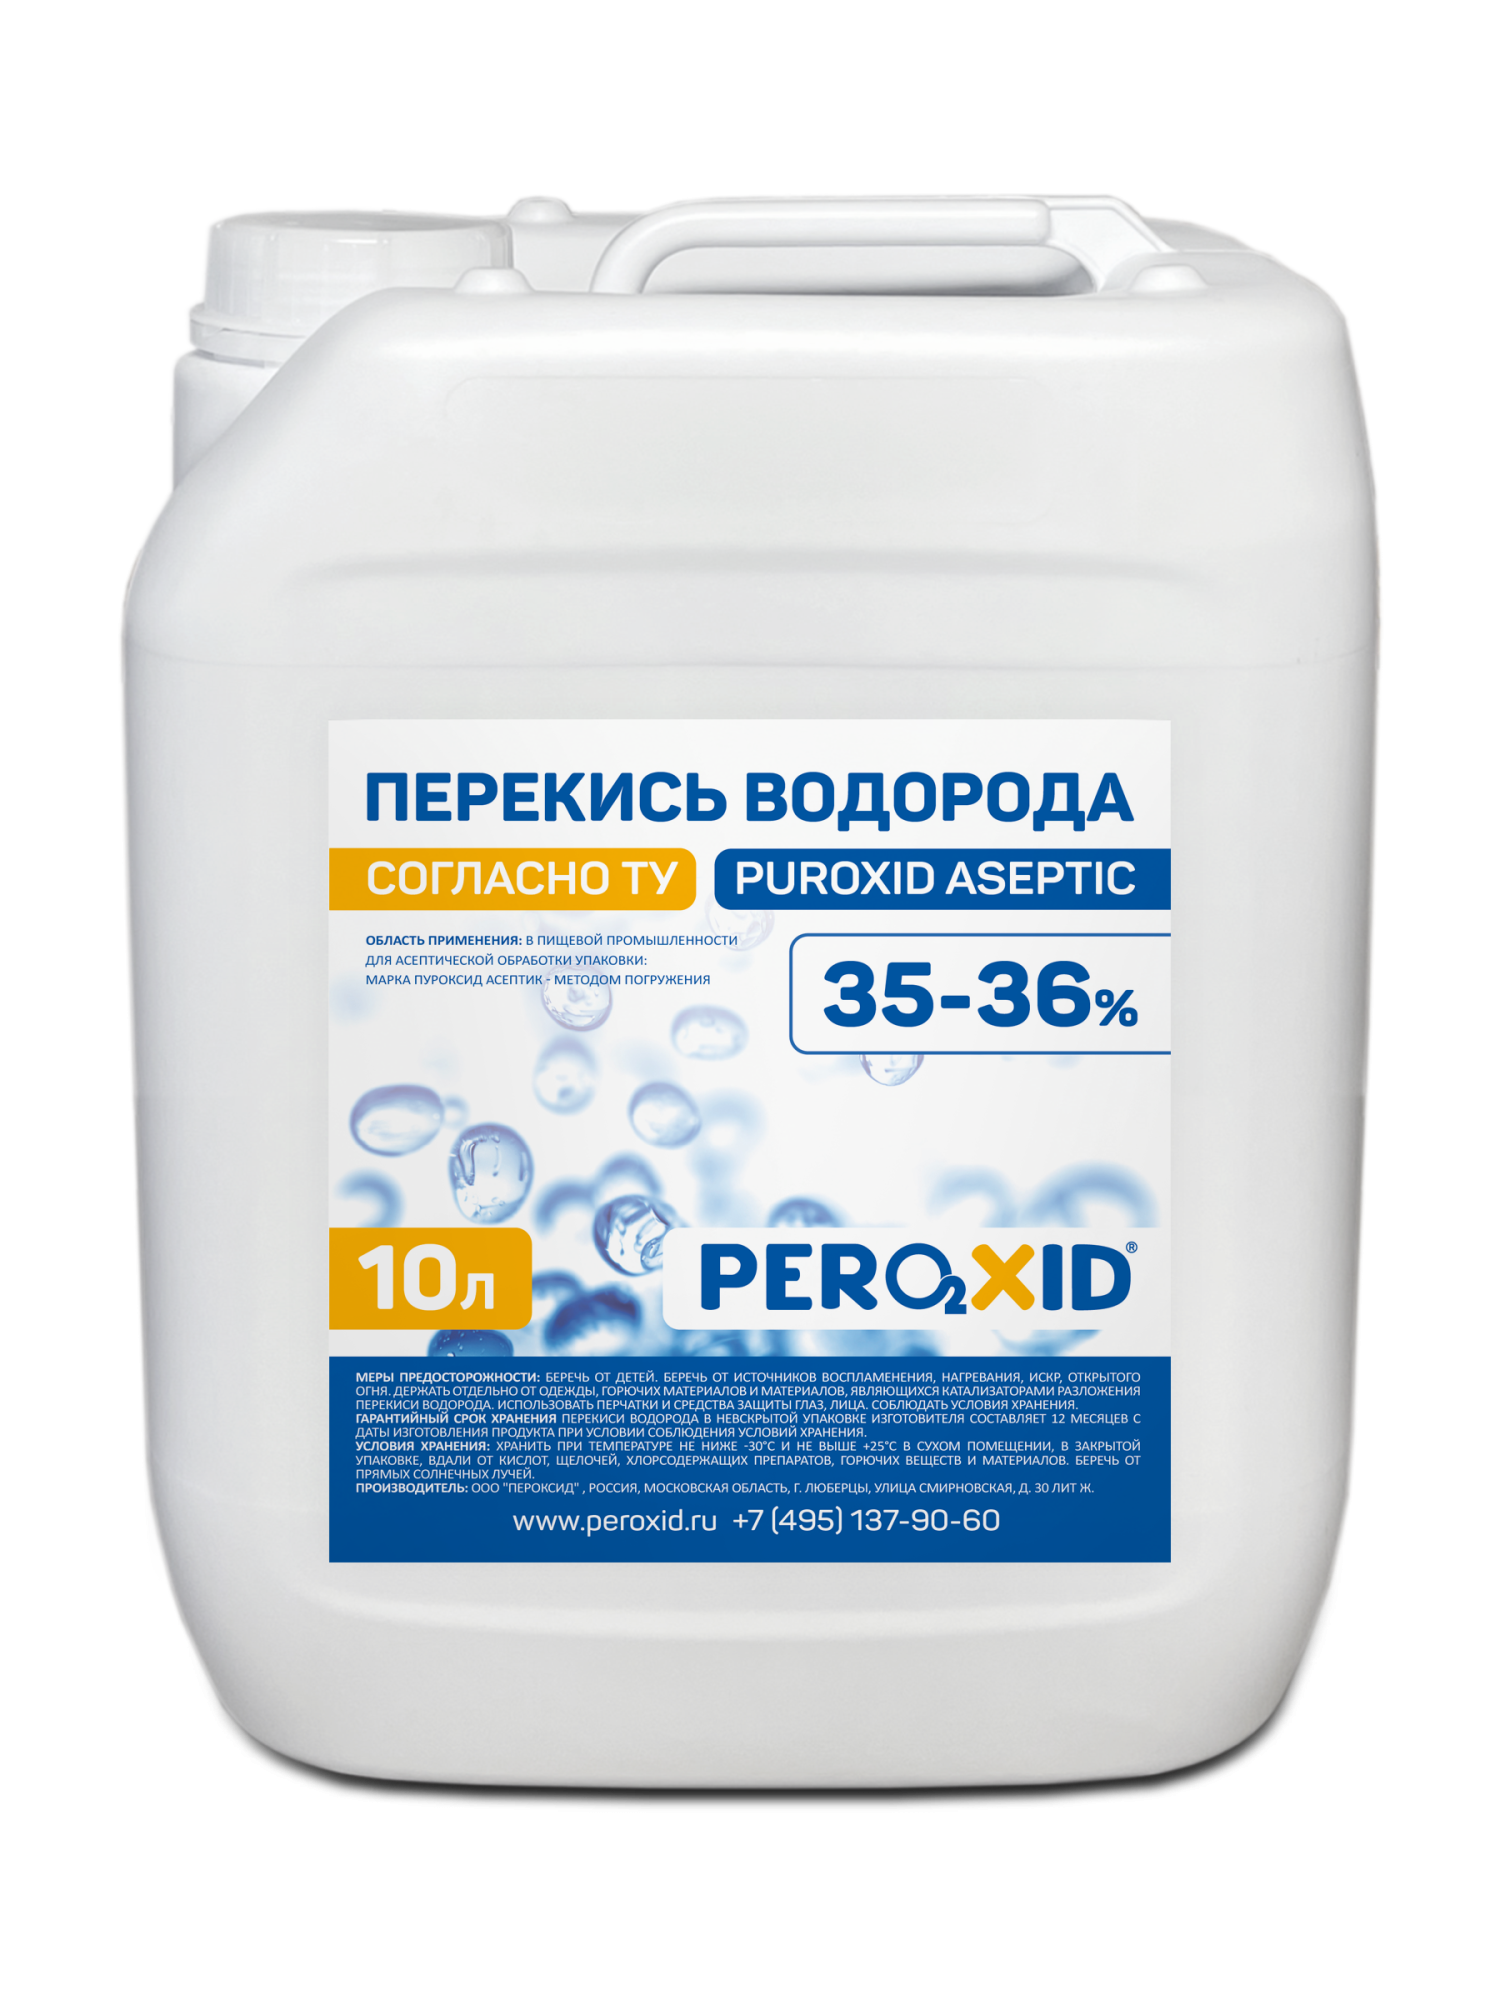 Перекись водорода асептическая PEROXID 35-36% марка Пуроксид асептик ТУ 2123-004-25665344-2009 10 л/12 кг